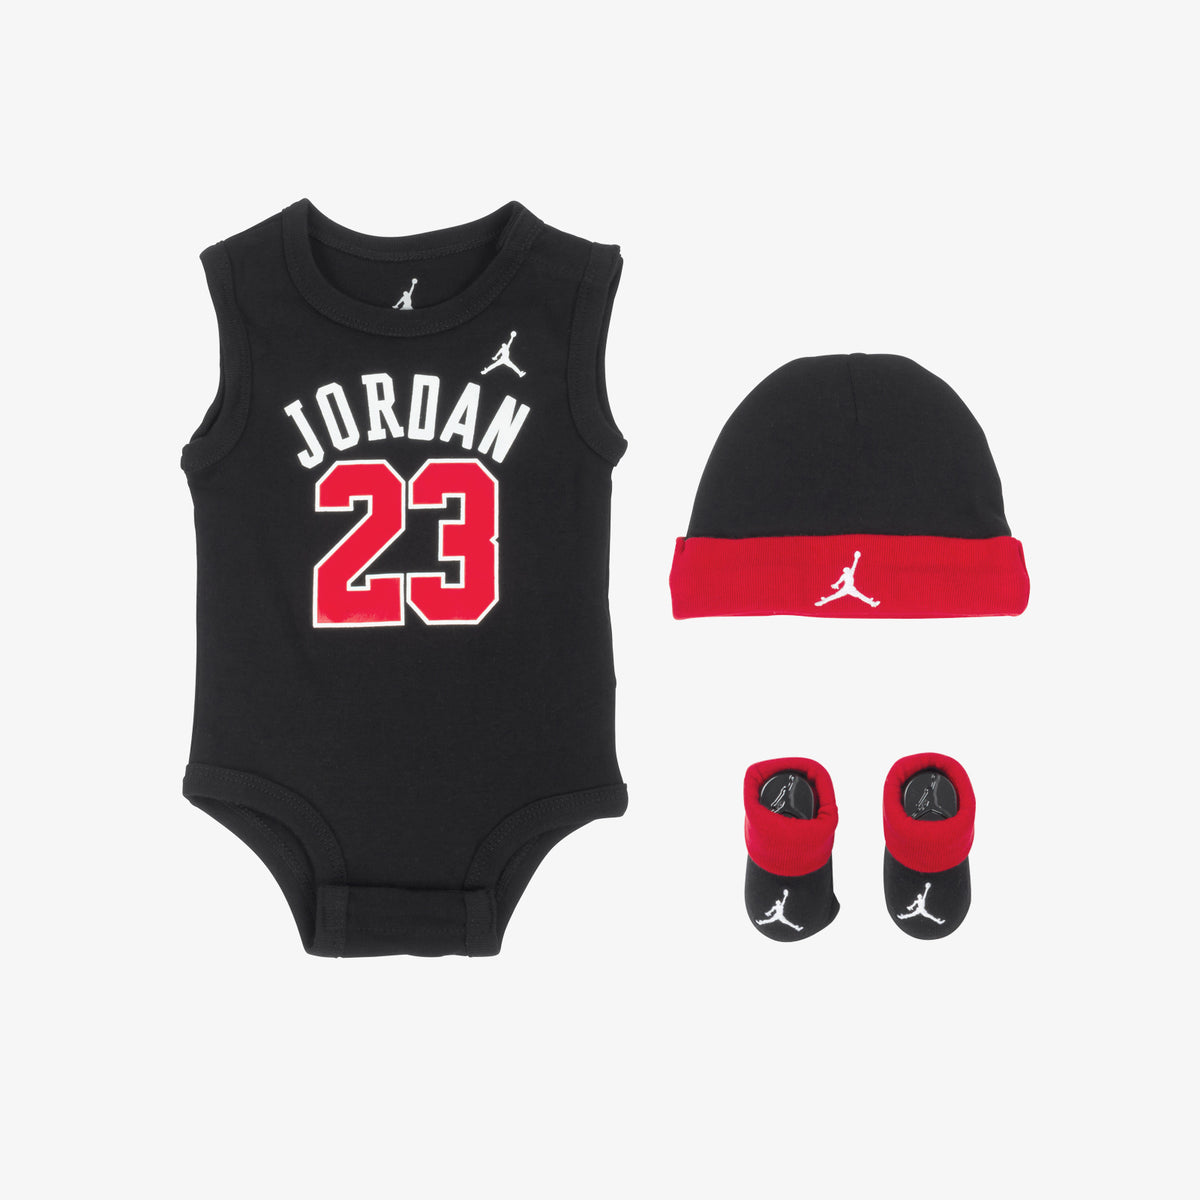 Jordan Jersey Infant 3 Piece Set - Black/Red